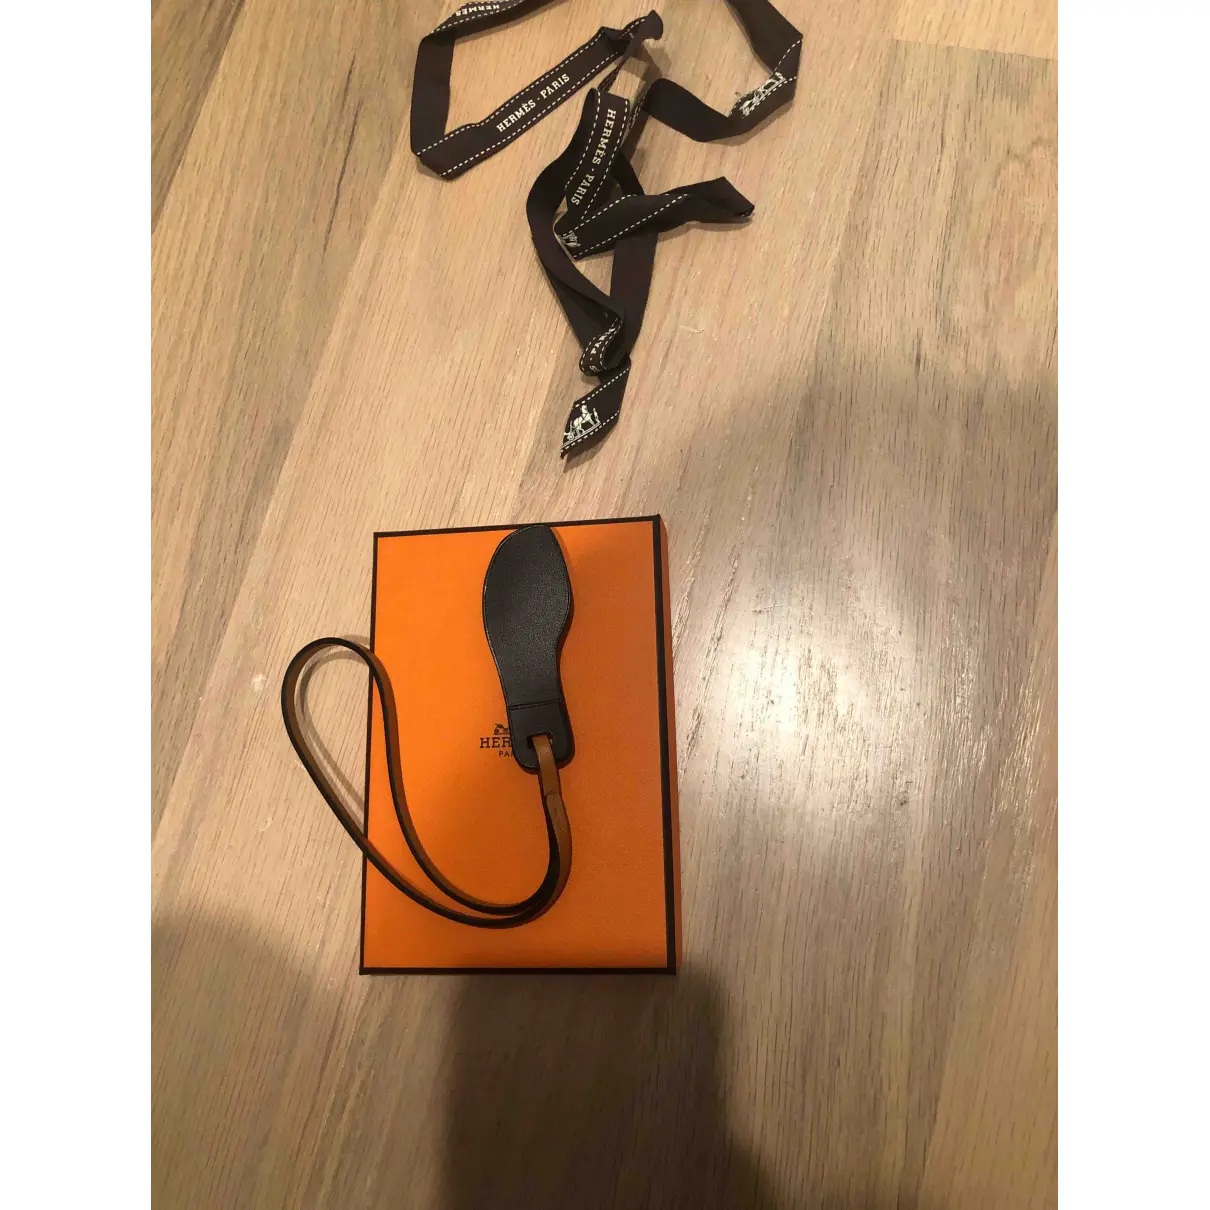 Buy Hermès Oran Nano Charm leather bag charm online